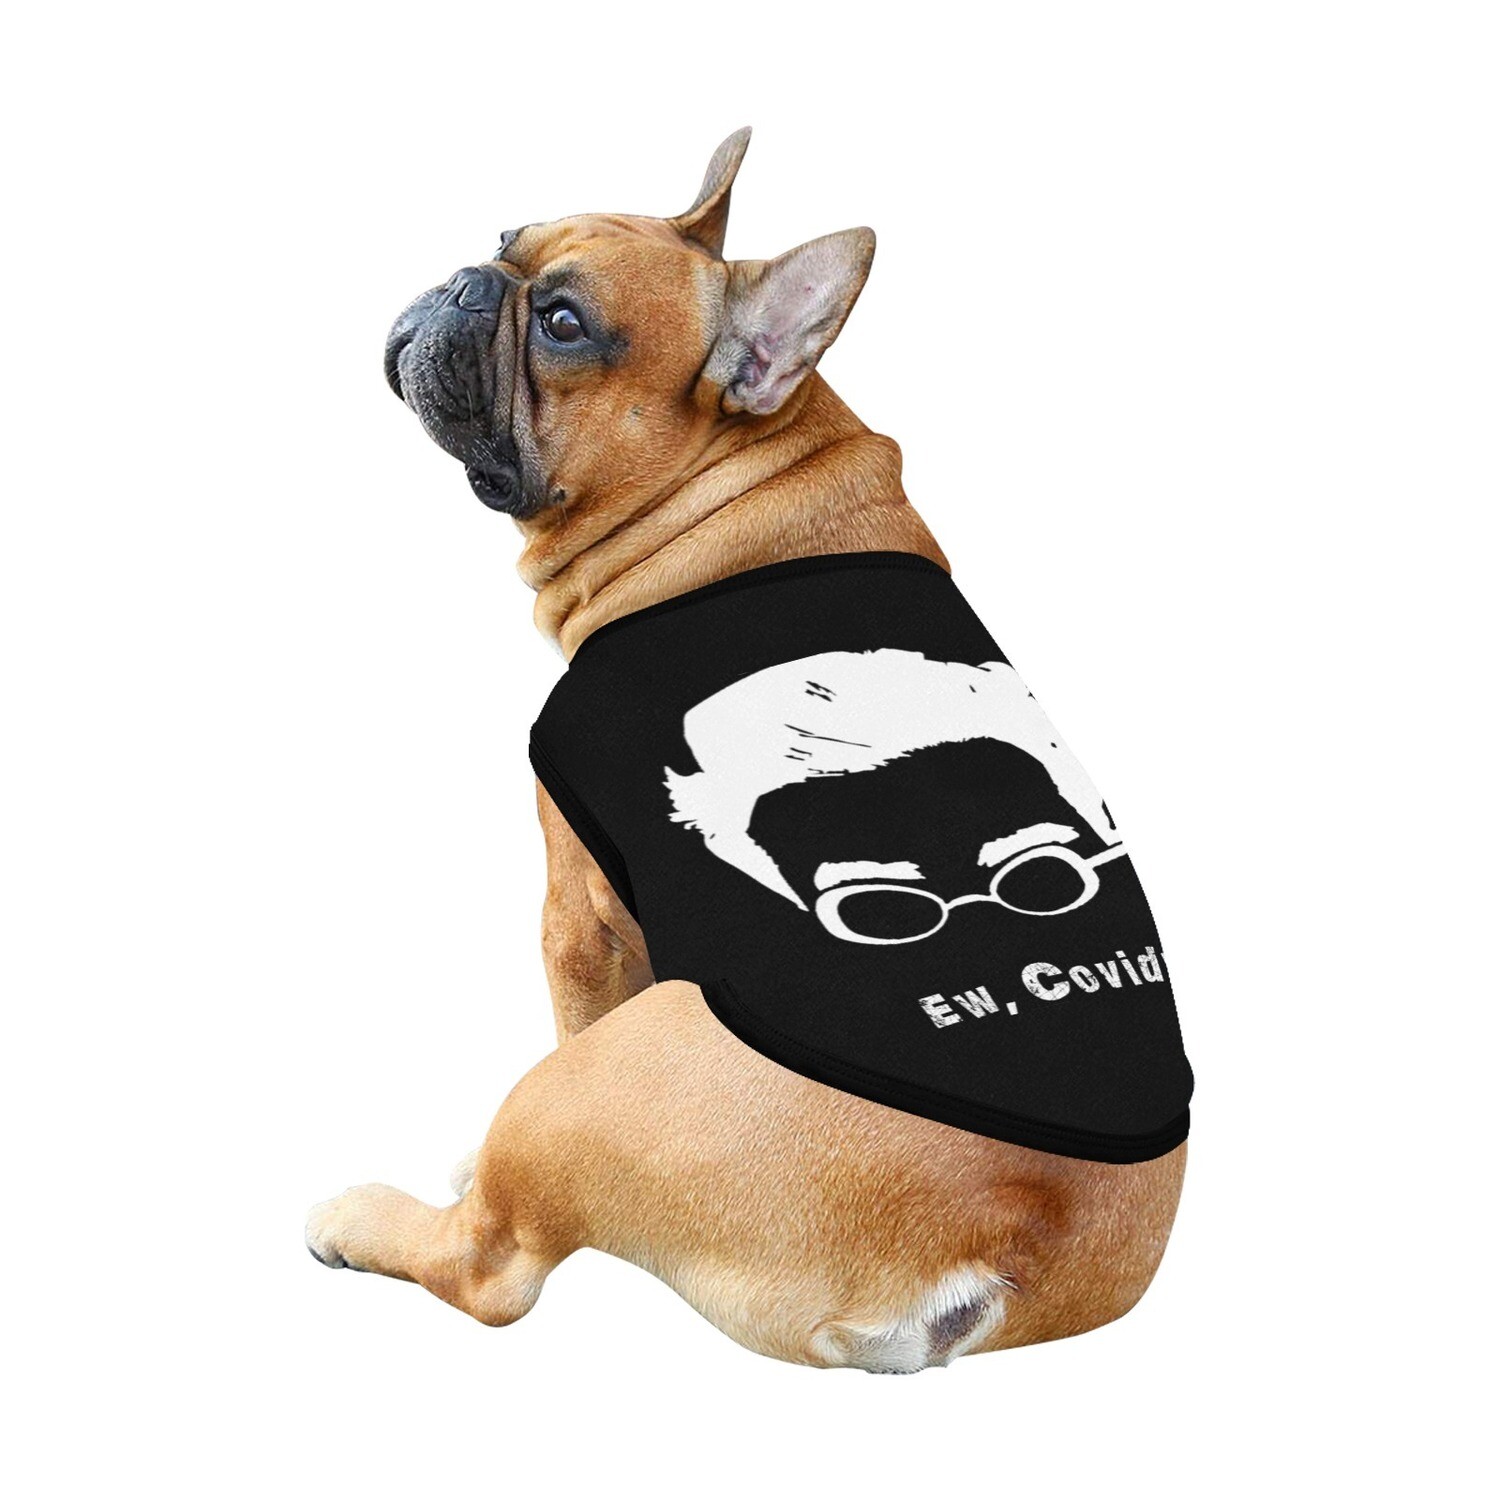 🐕 David Rose silhouette Ew, Covid Dog t-shirt, Dog Tank Top, Dog shirt, Dog clothes, Gifts, front back print, 7 sizes XS to 3XL, Schitt's Creek, TV series